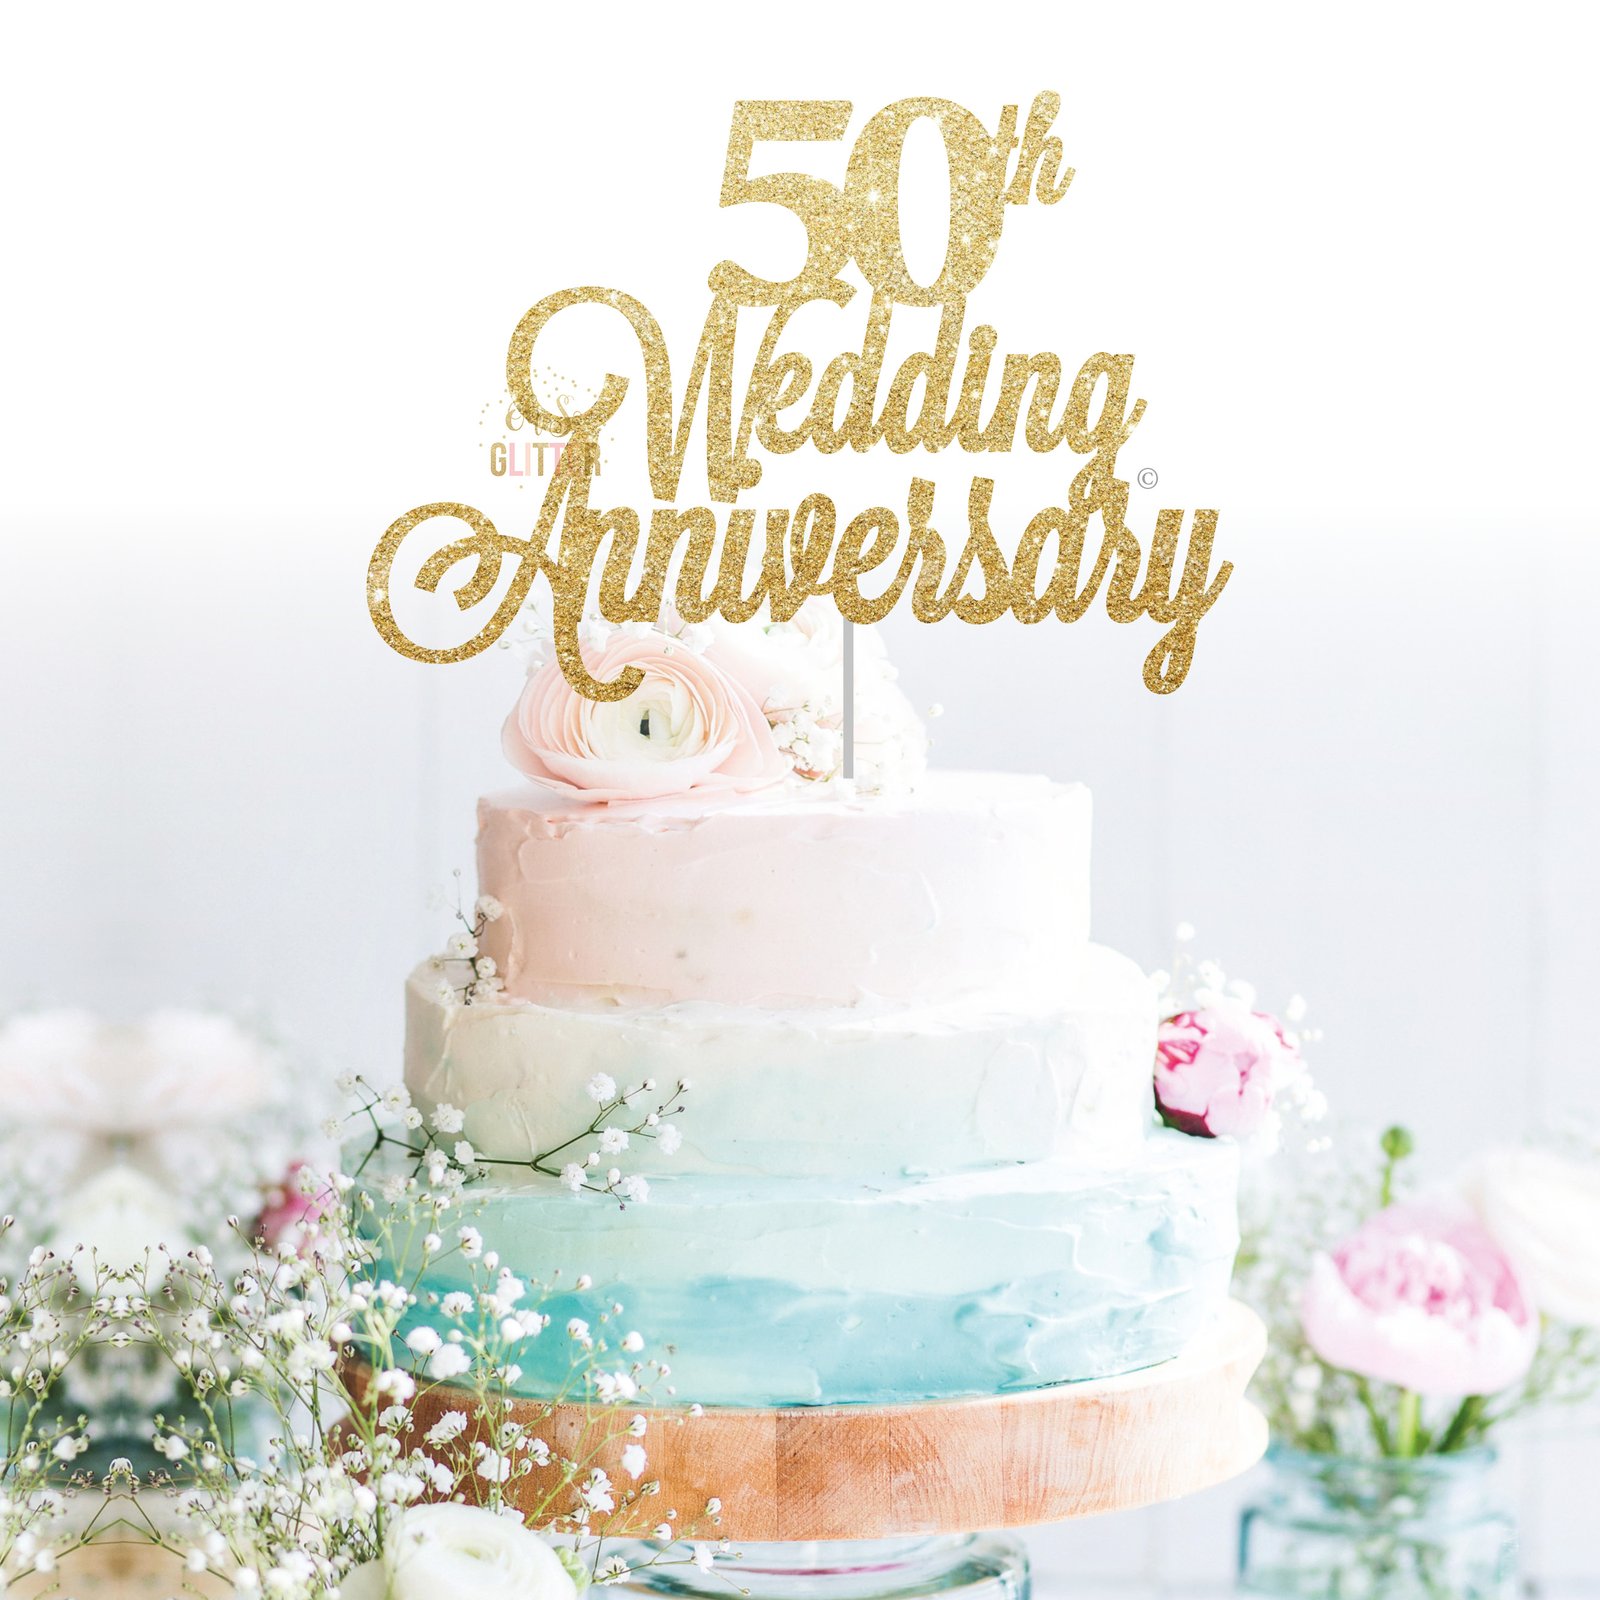 White & Gold Cake Pops 50th Wedding Anniversary  www.facebook.com/FriscoCakePopShop www.FriscoCakePopShop… | 50th  anniversary cakes, Anniversary cake, 50th wedding